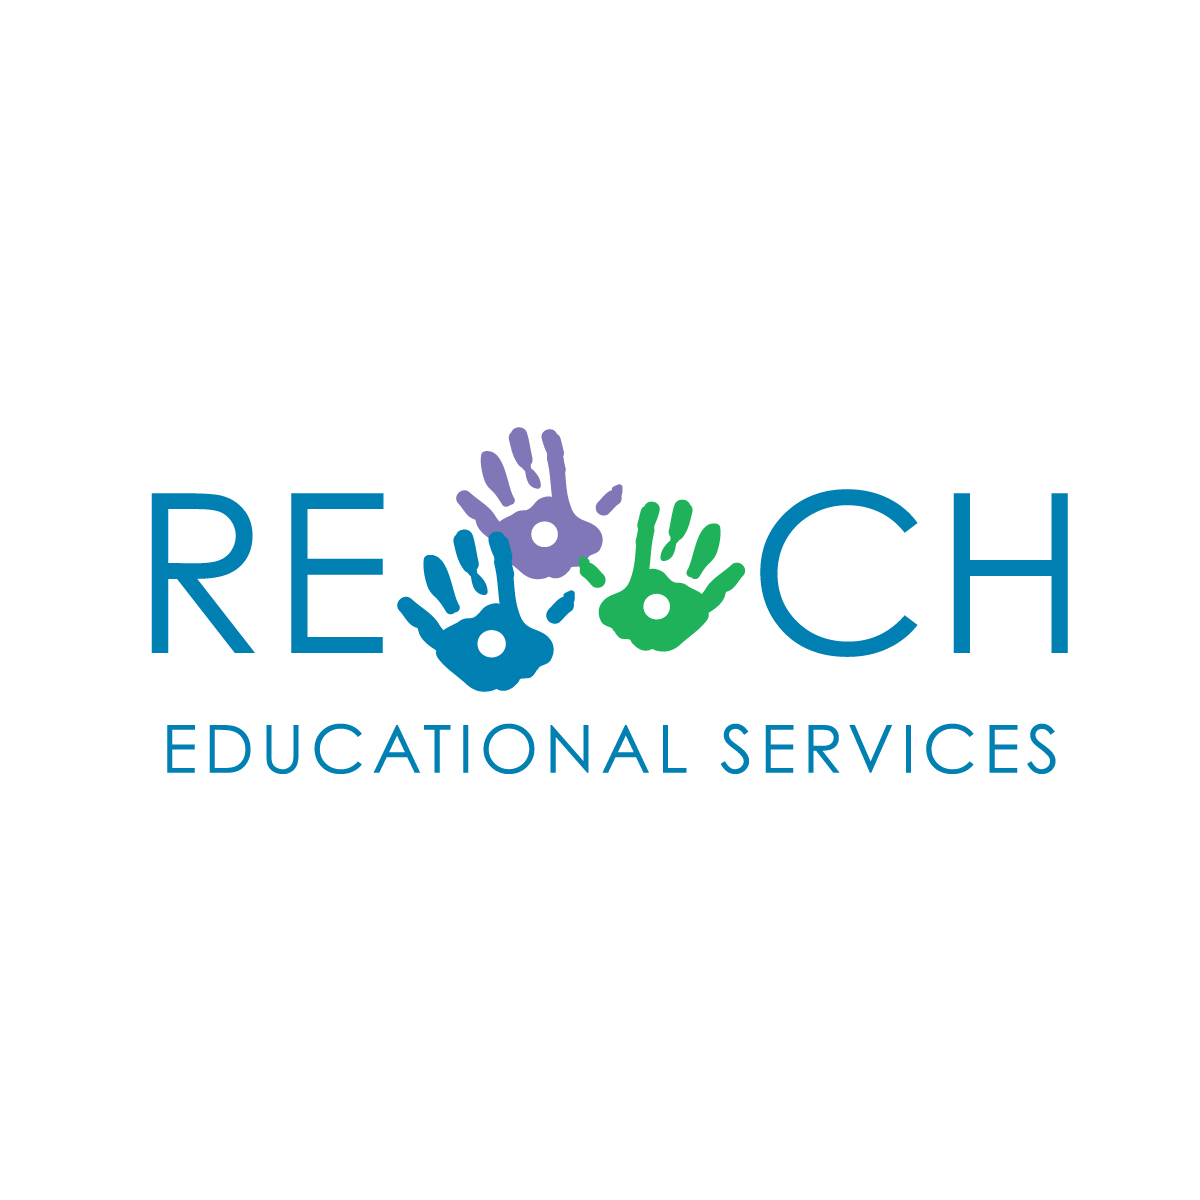 Reach Organization namemark logo